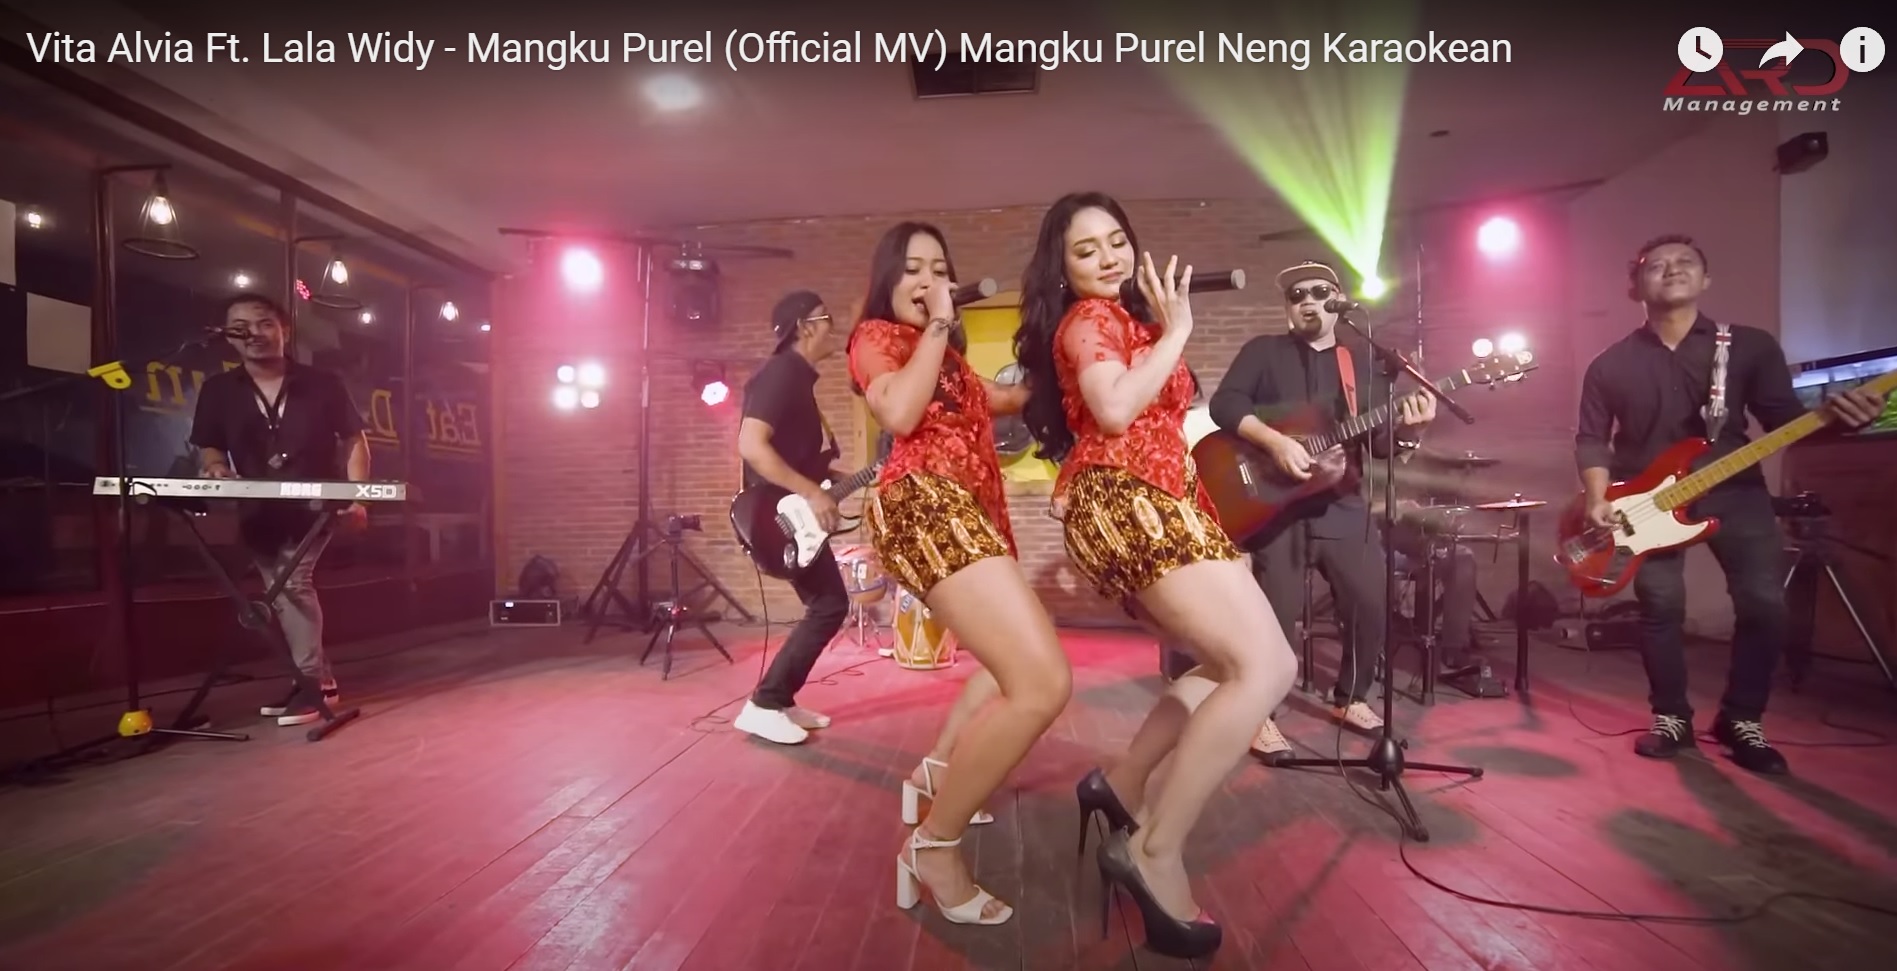 'Mangku Purel' Lirik Lagu dan Artinya Dalam Bahasa Indonesia